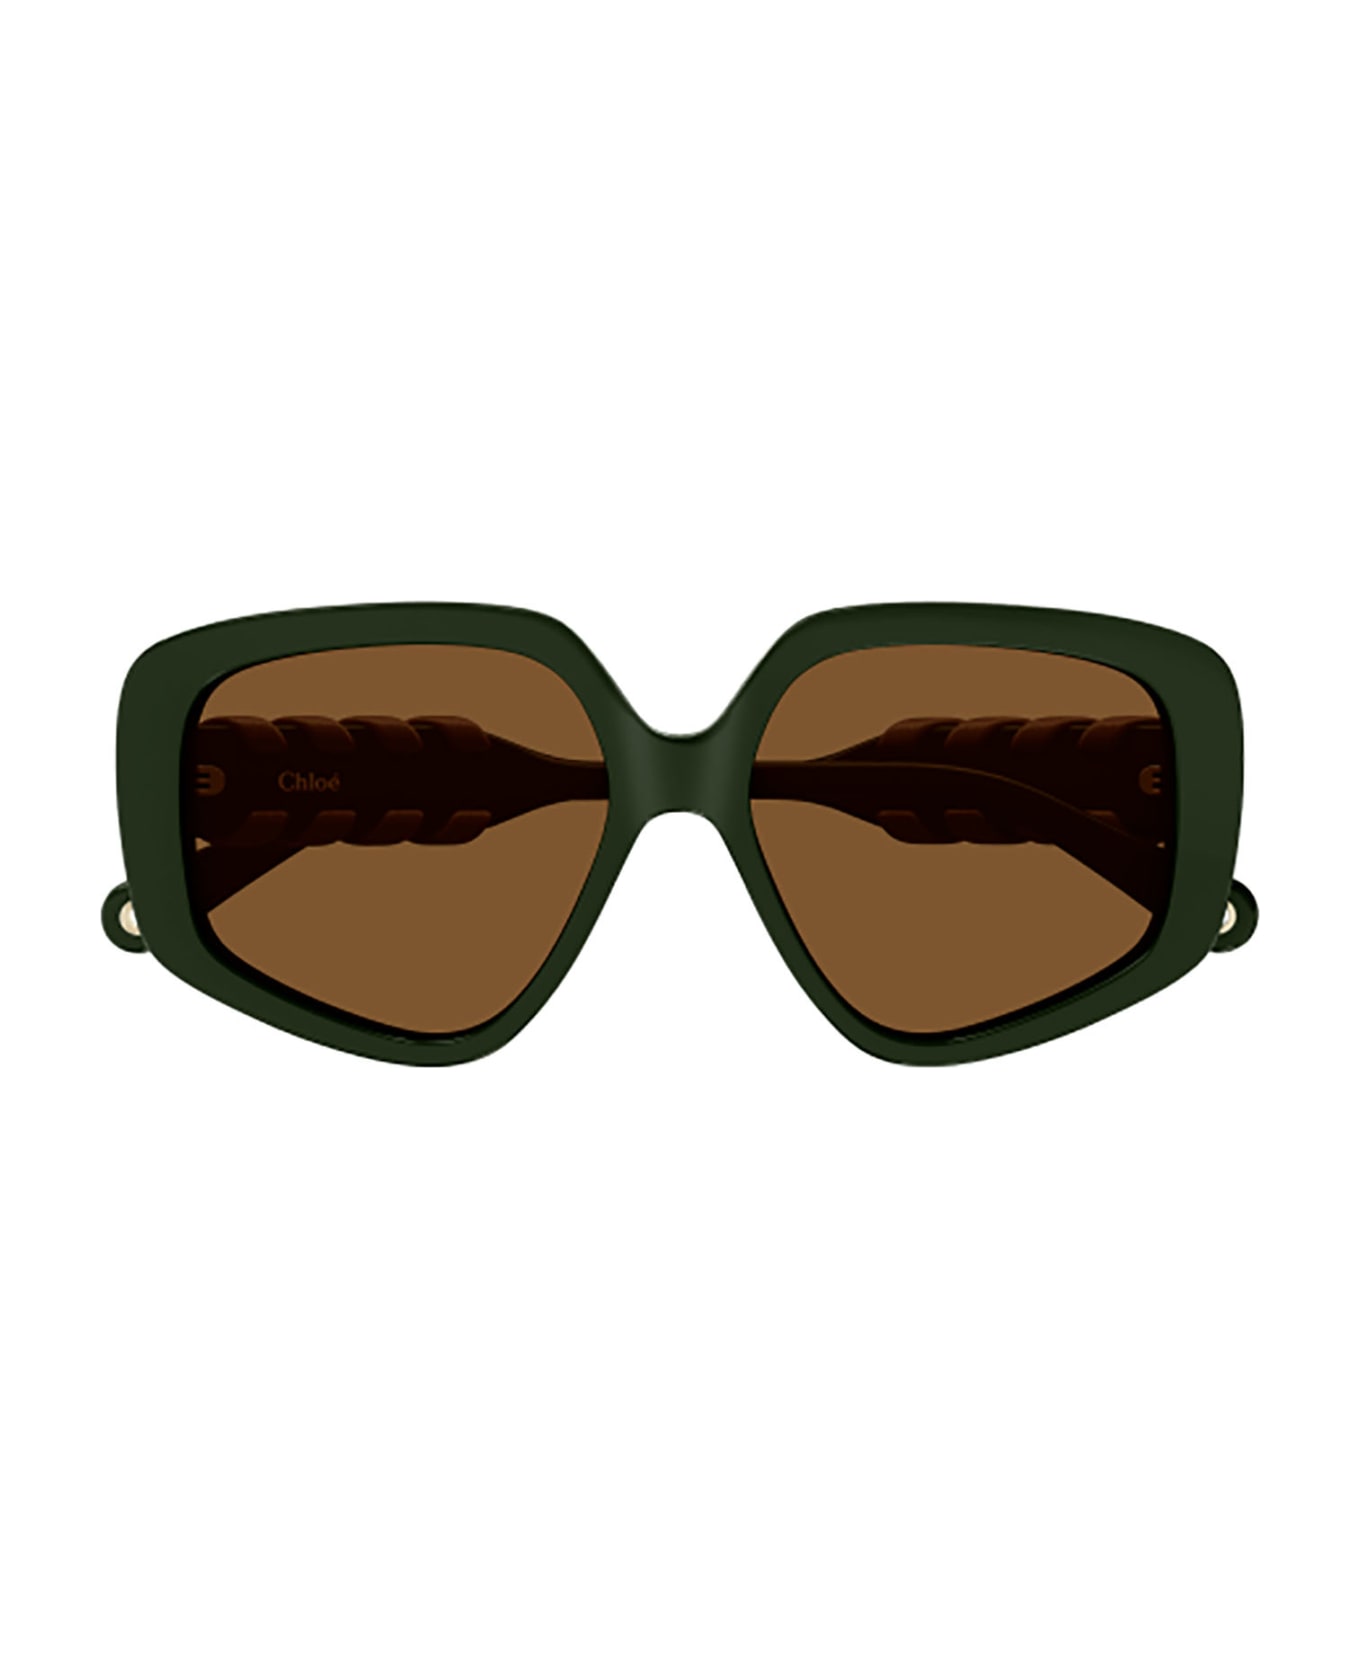 Chloé Eyewear CH0210S Sunglasses - Bv1176s-001 Black Sunglasses